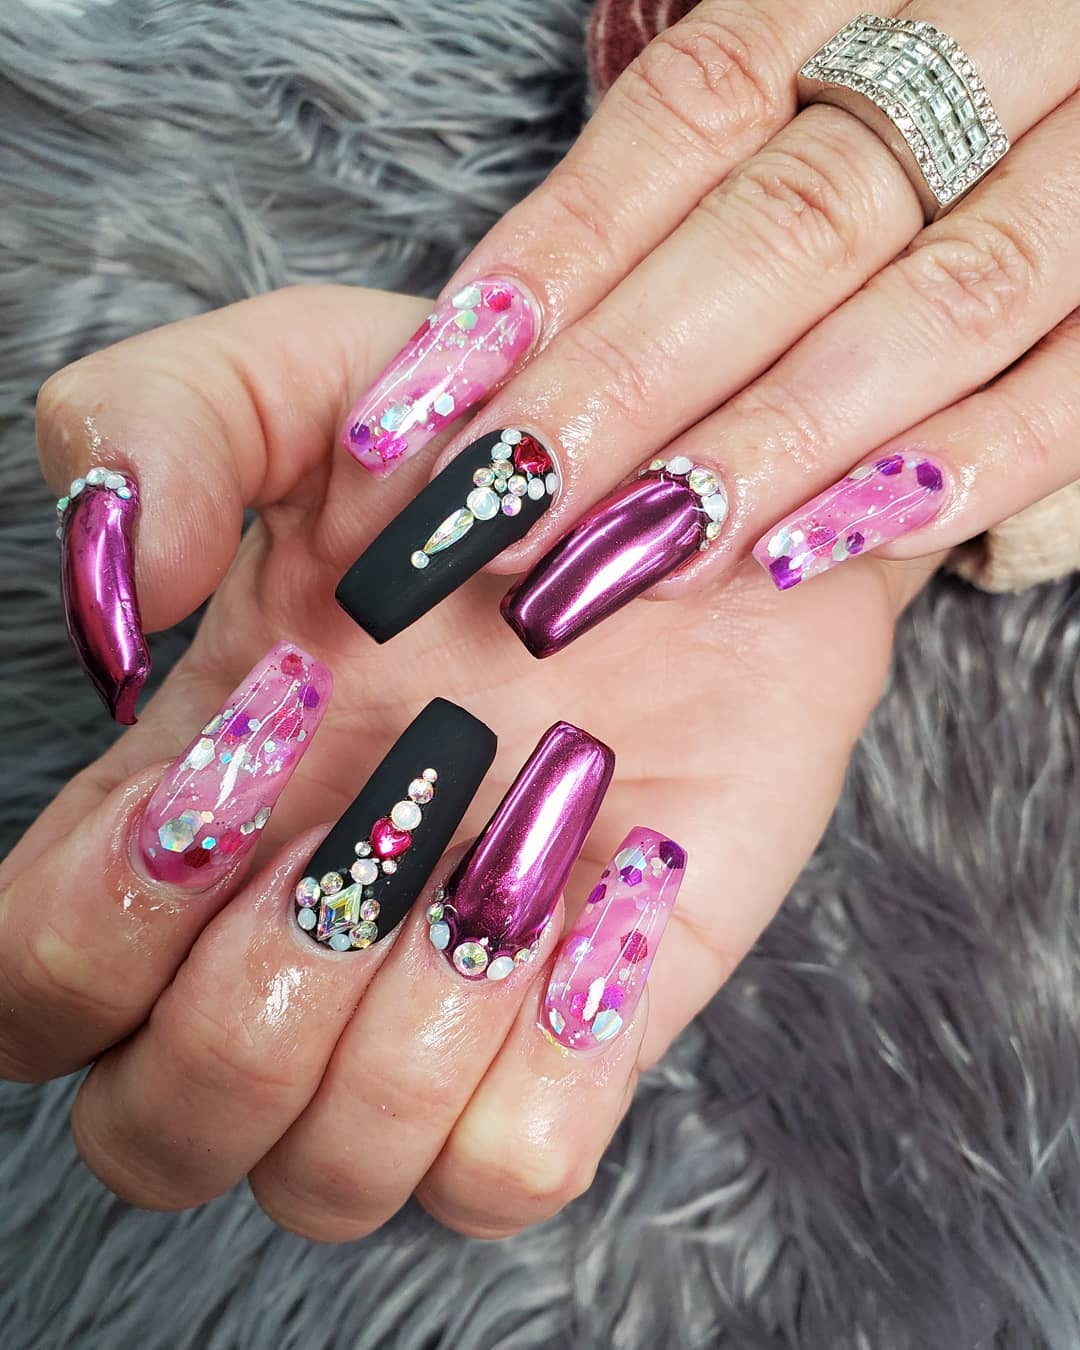 Rhinestones and pink chrome nails